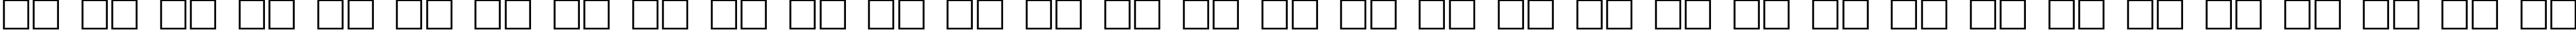 Пример написания русского алфавита шрифтом Live_wire